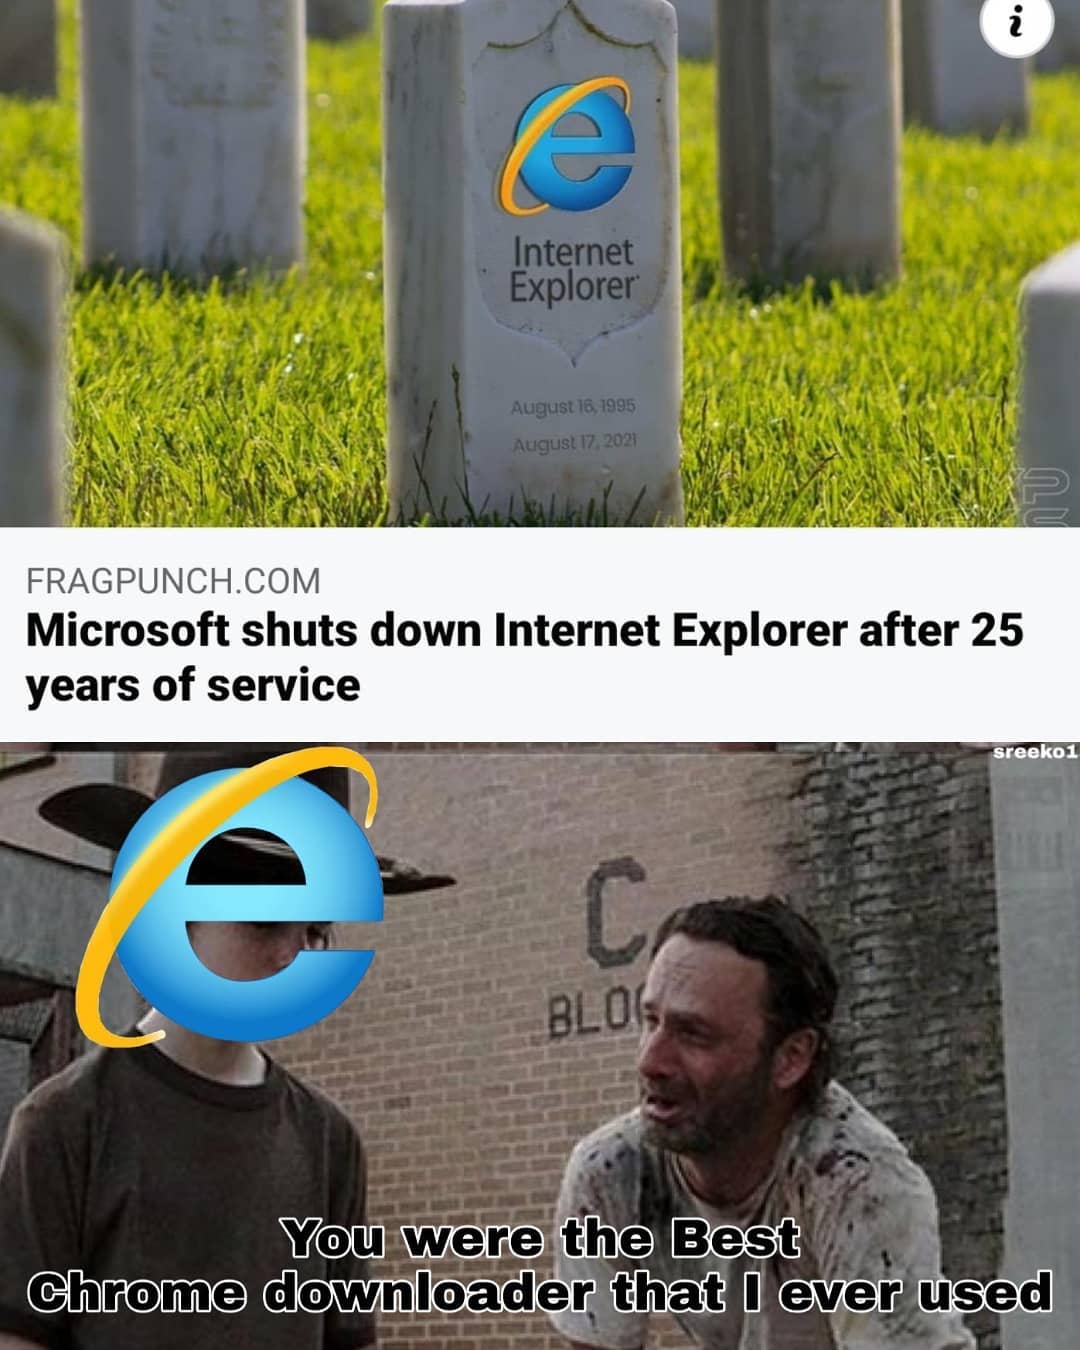 dank memes - i Internet Explorer Fragpunch.Com Microsoft shuts down Internet Explorer after 25 years of service sreeko1 C Blo You were the Best Chrome downloader that I ever used